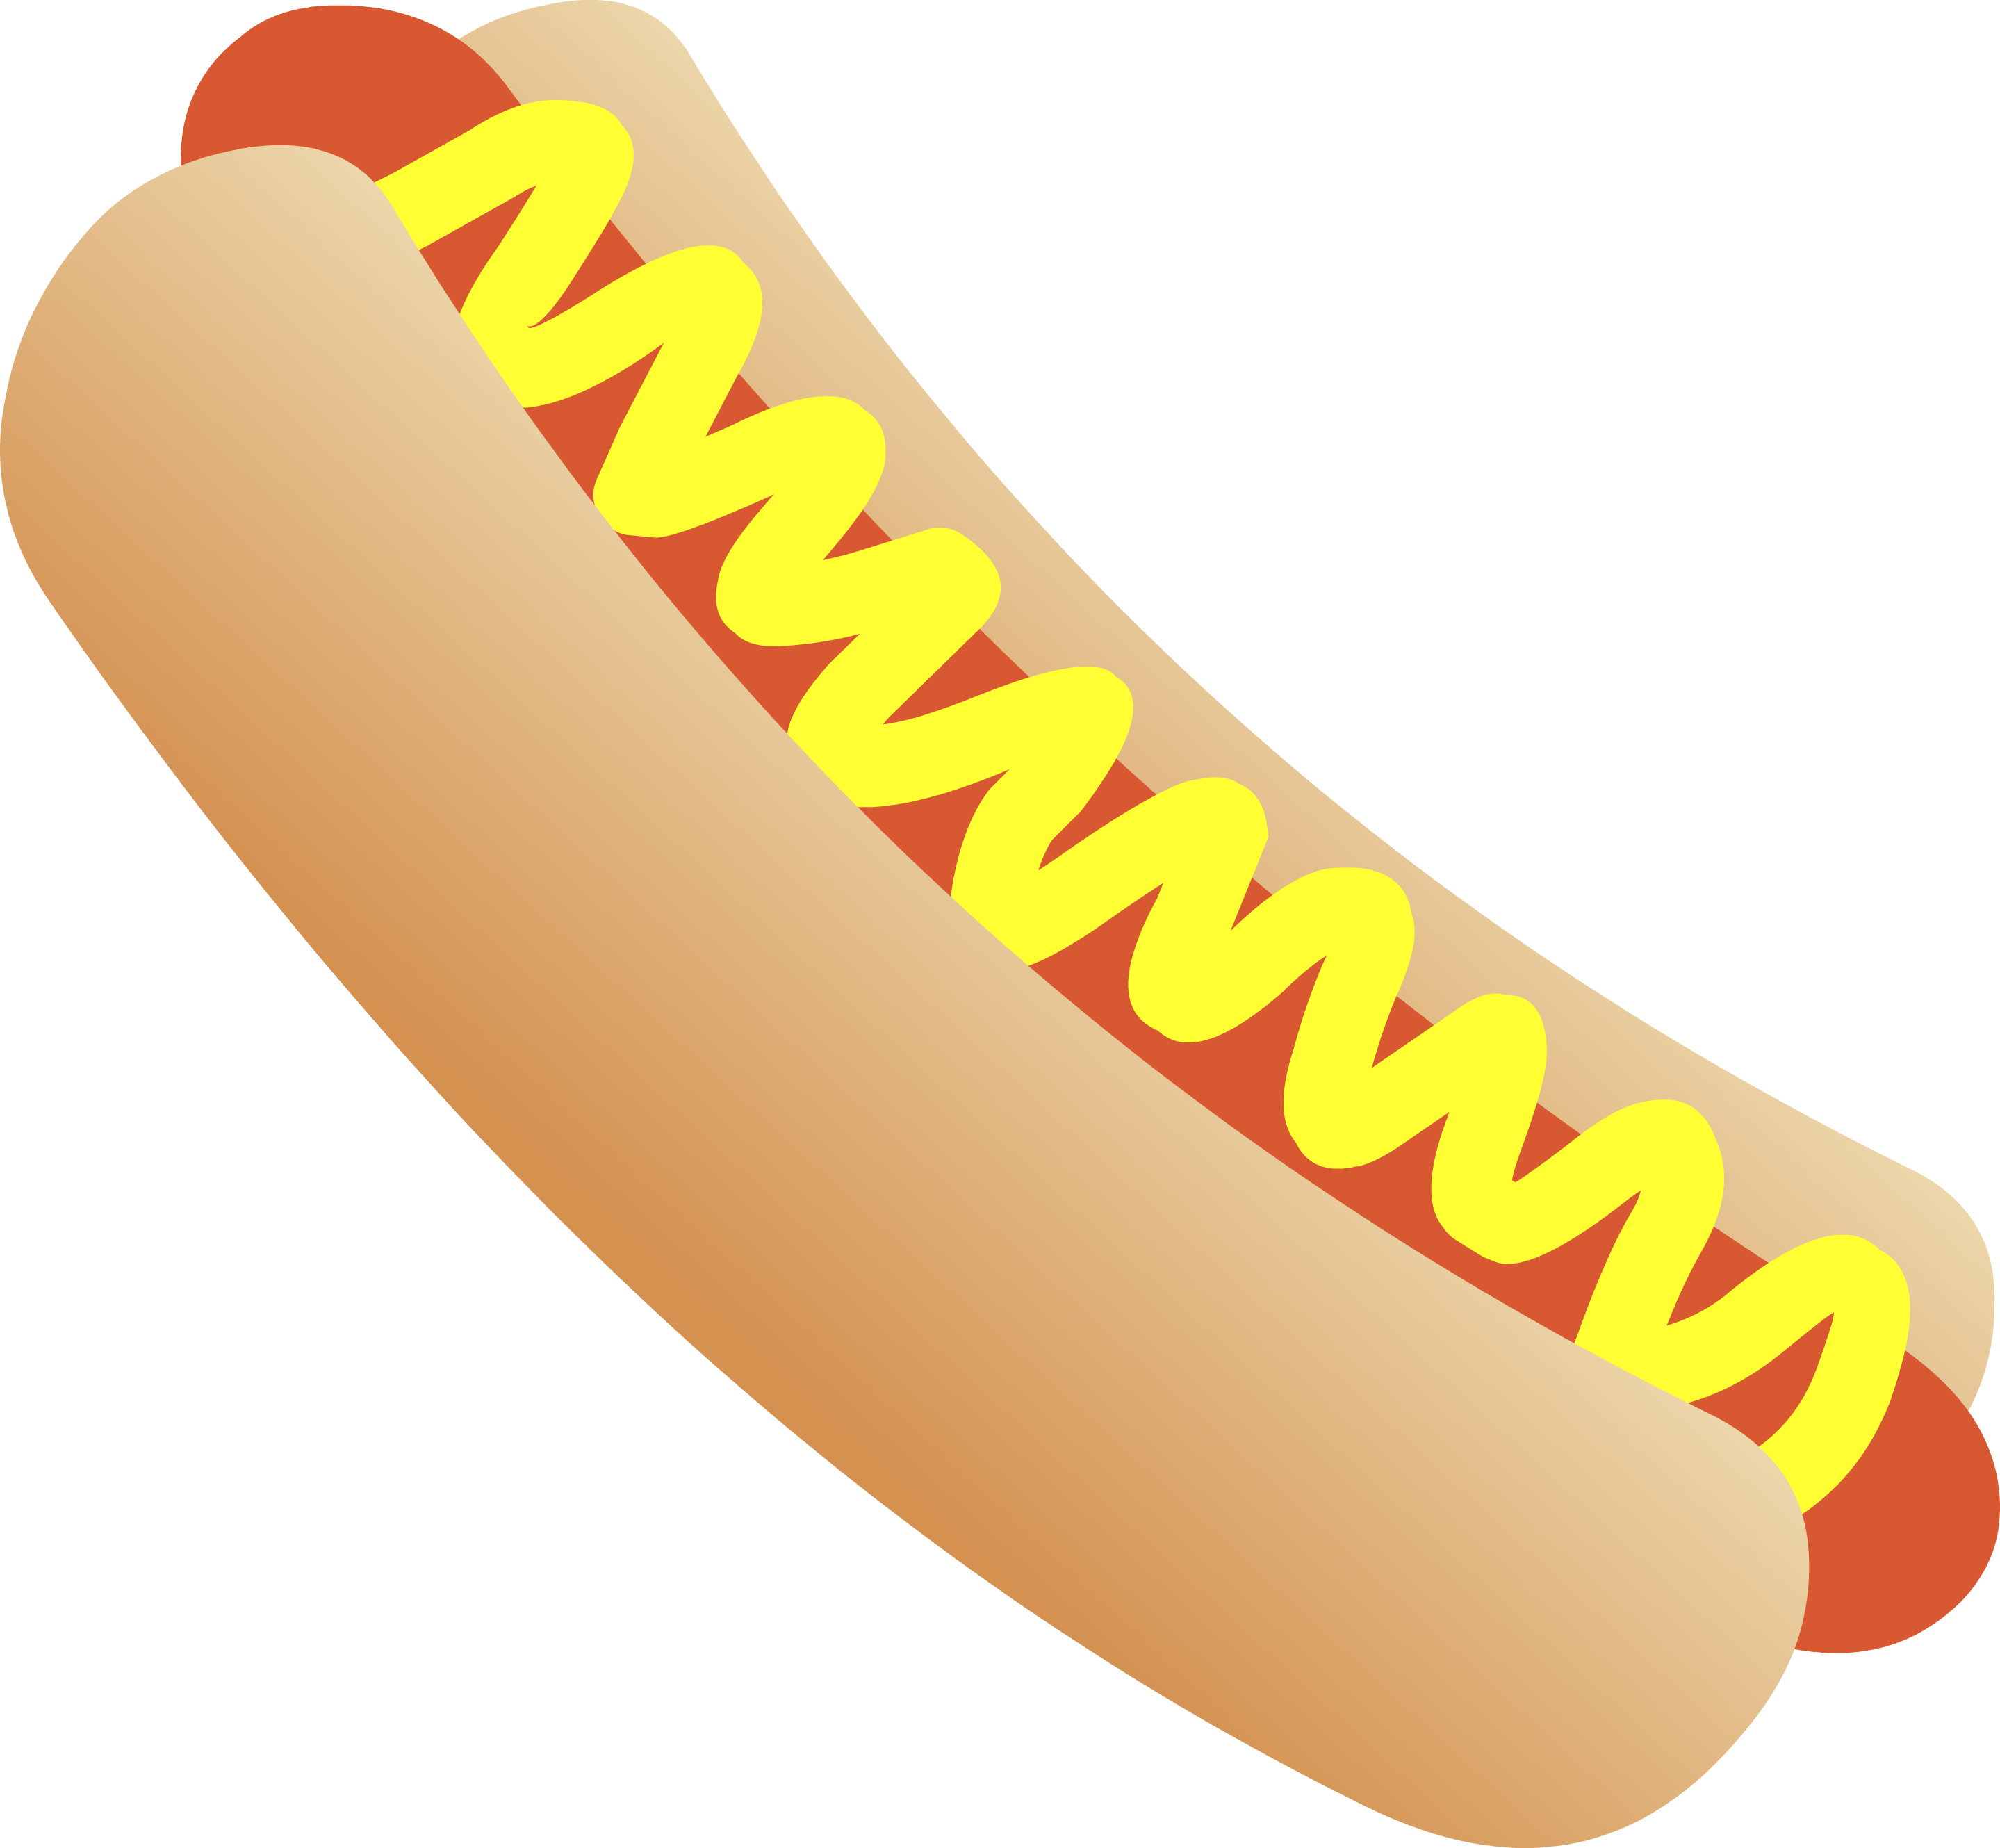 hotdog clipart picnic food